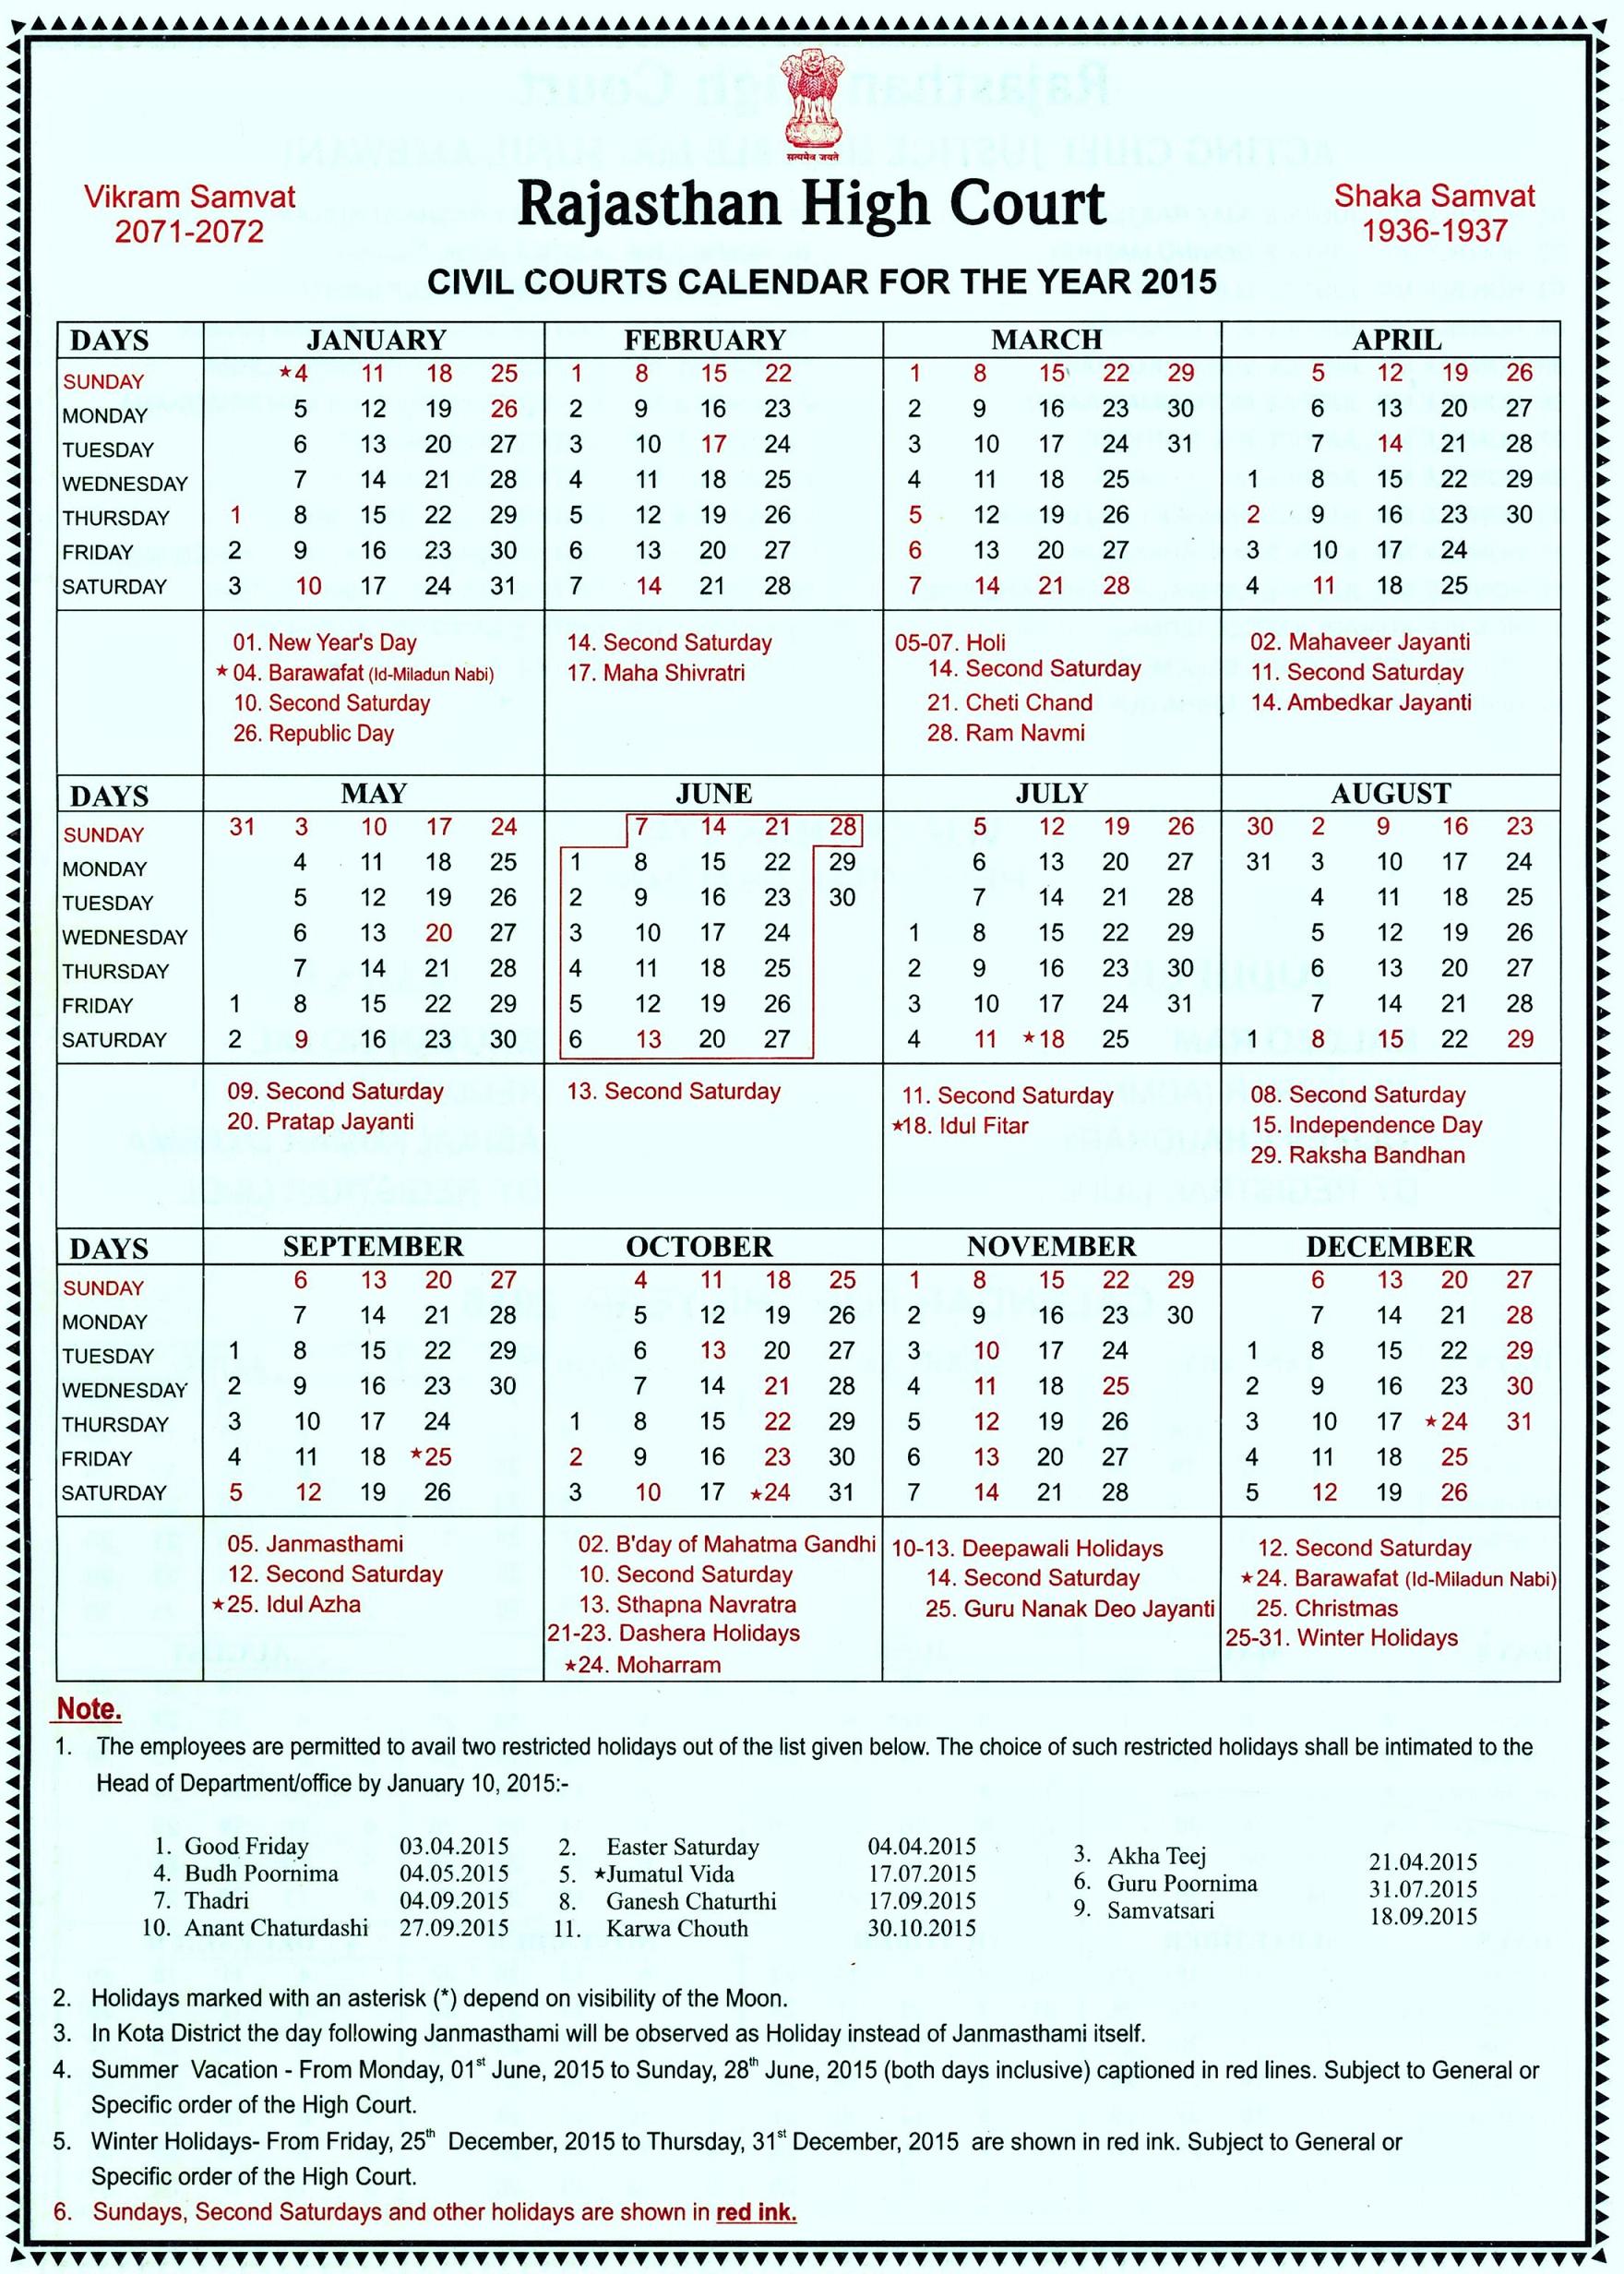 Rajasthan High Court (Civil Courts) Calendar 2015